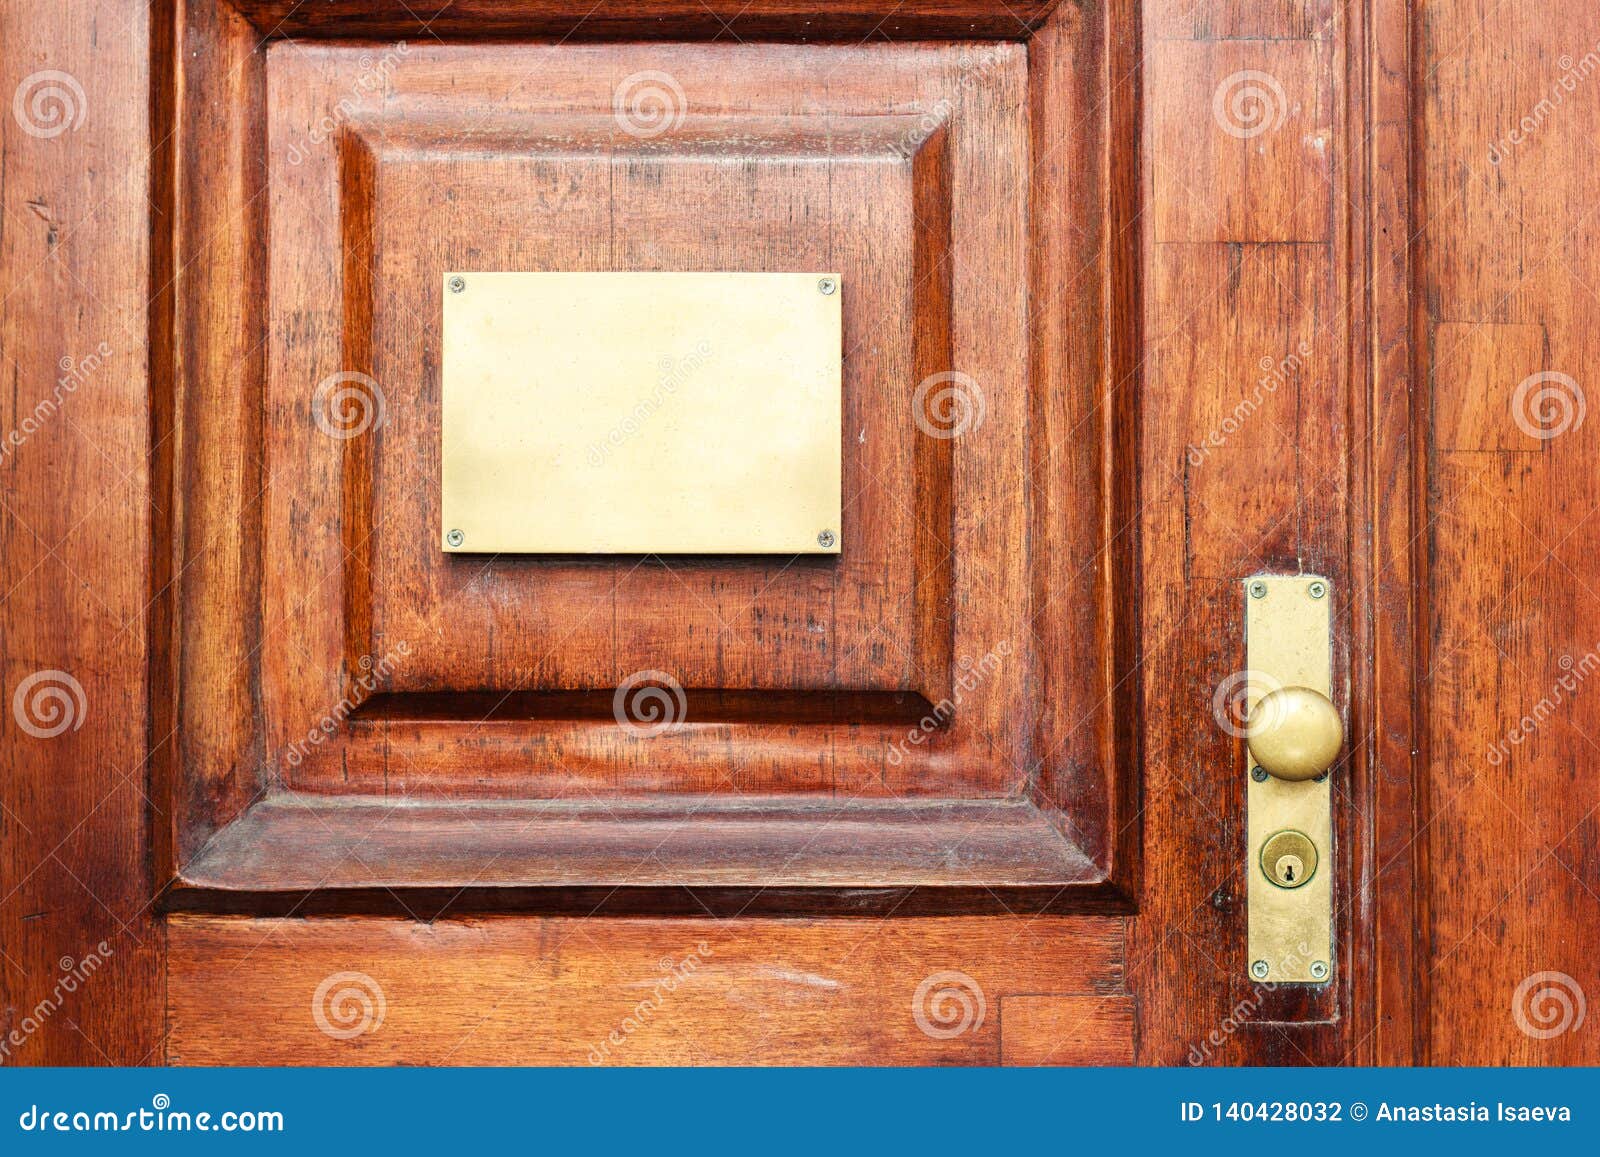 Download Door Mock Up Desk. Mock Up Template / Signboard Stock Photo - Image of board, office: 140428032